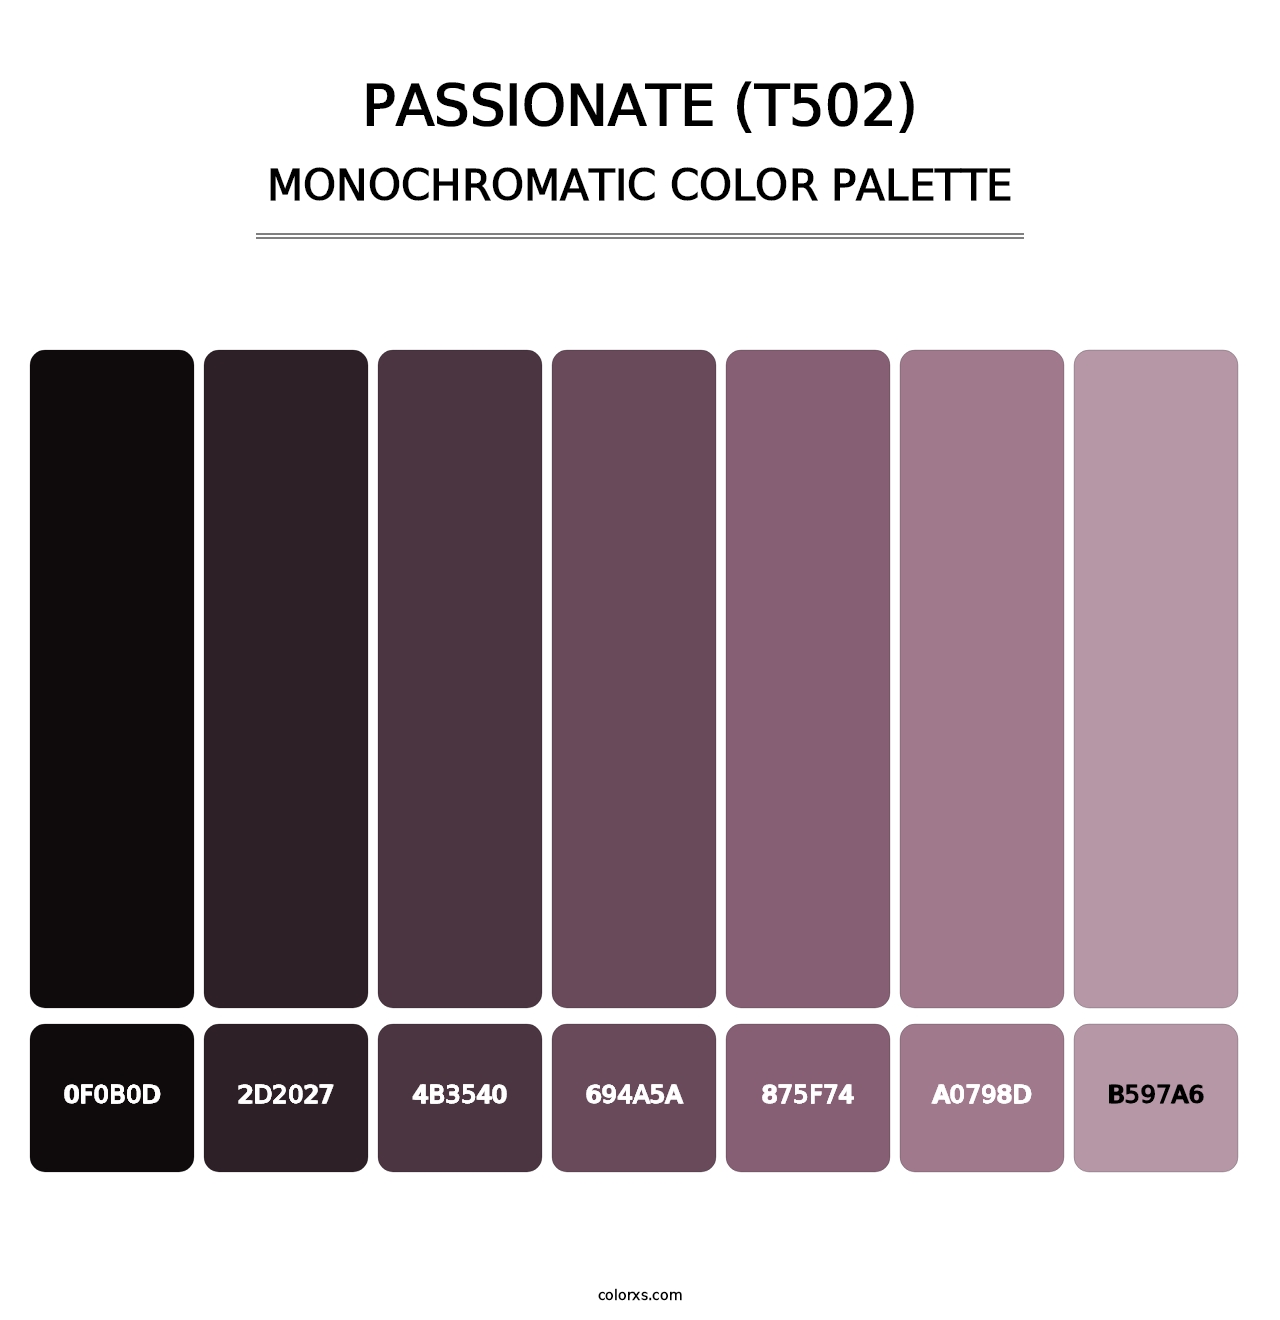 Passionate (T502) - Monochromatic Color Palette